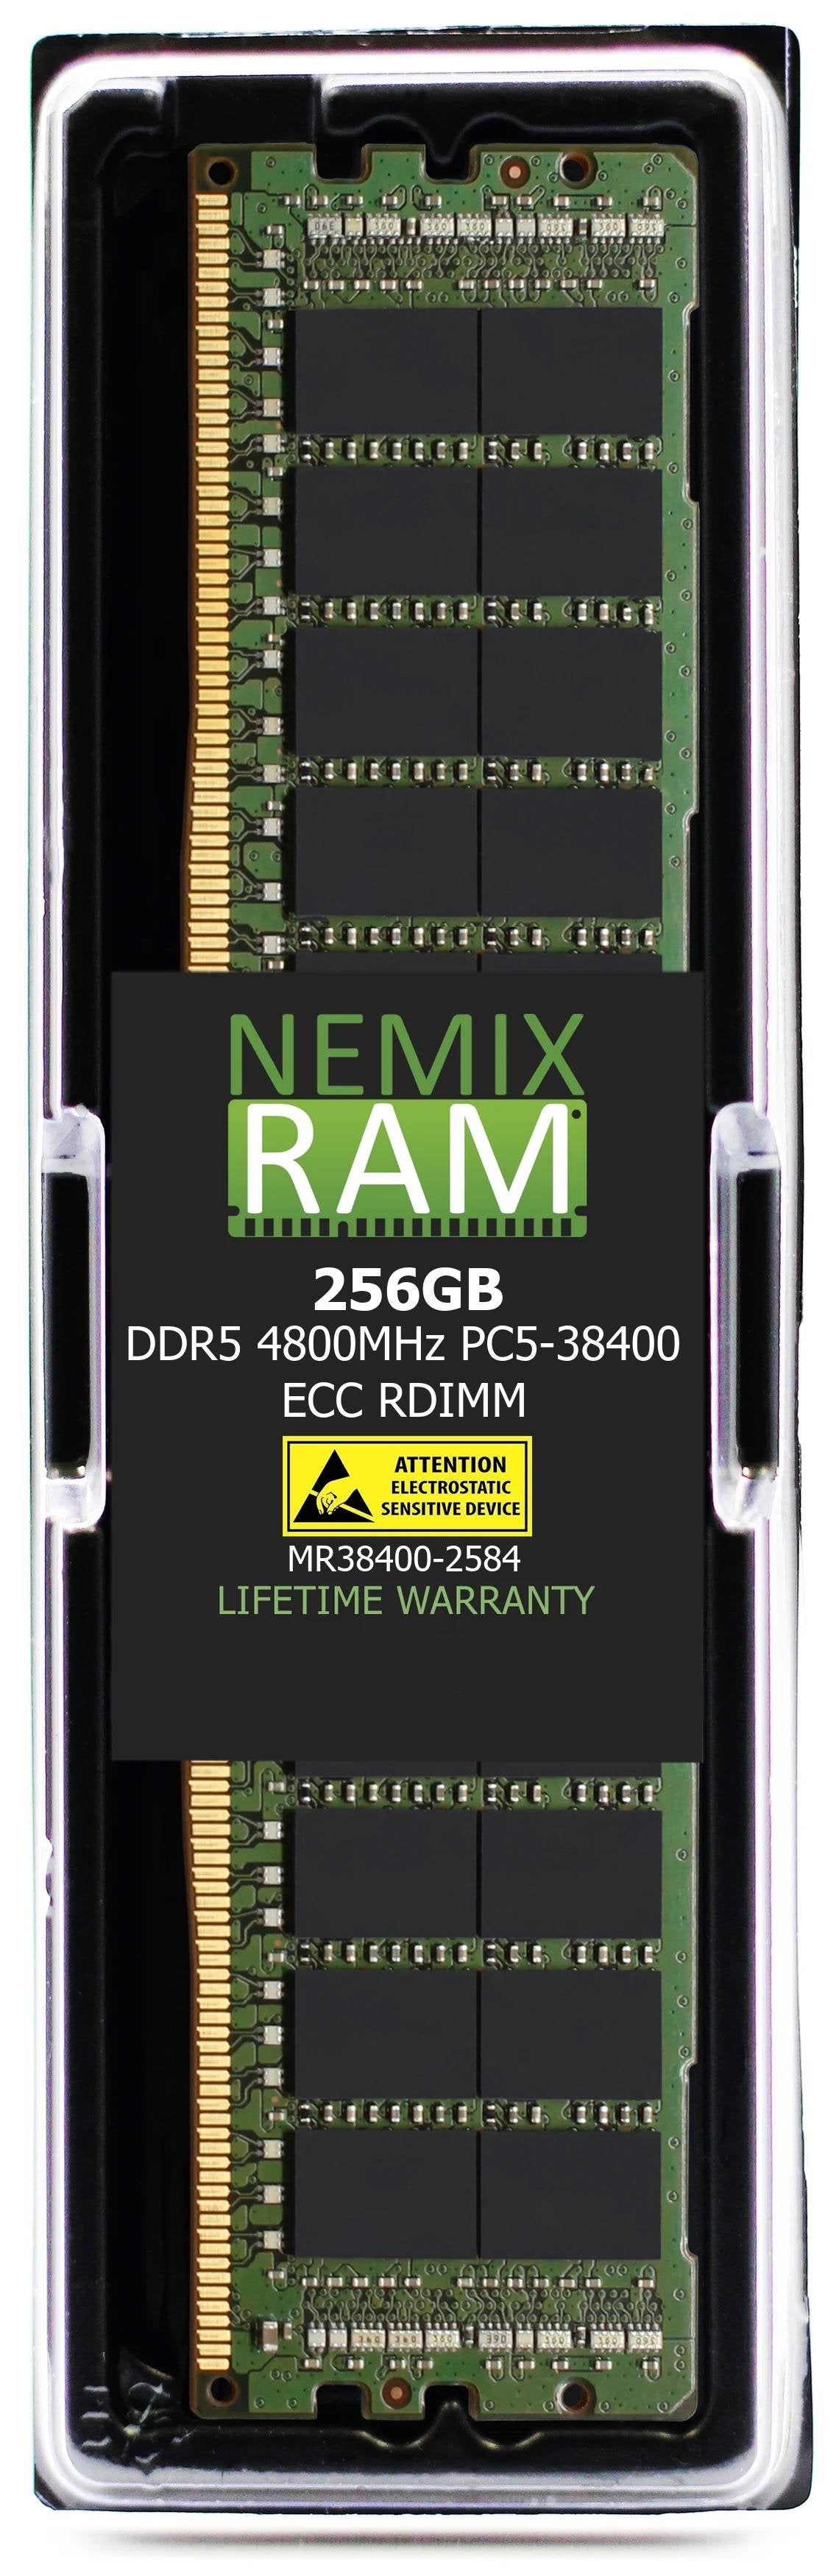 NEMIX RAM 256GB DDR5 4800MHz PC5-38400 ECC RDIMM Compatible with Hynix HMCT14MEERA150N